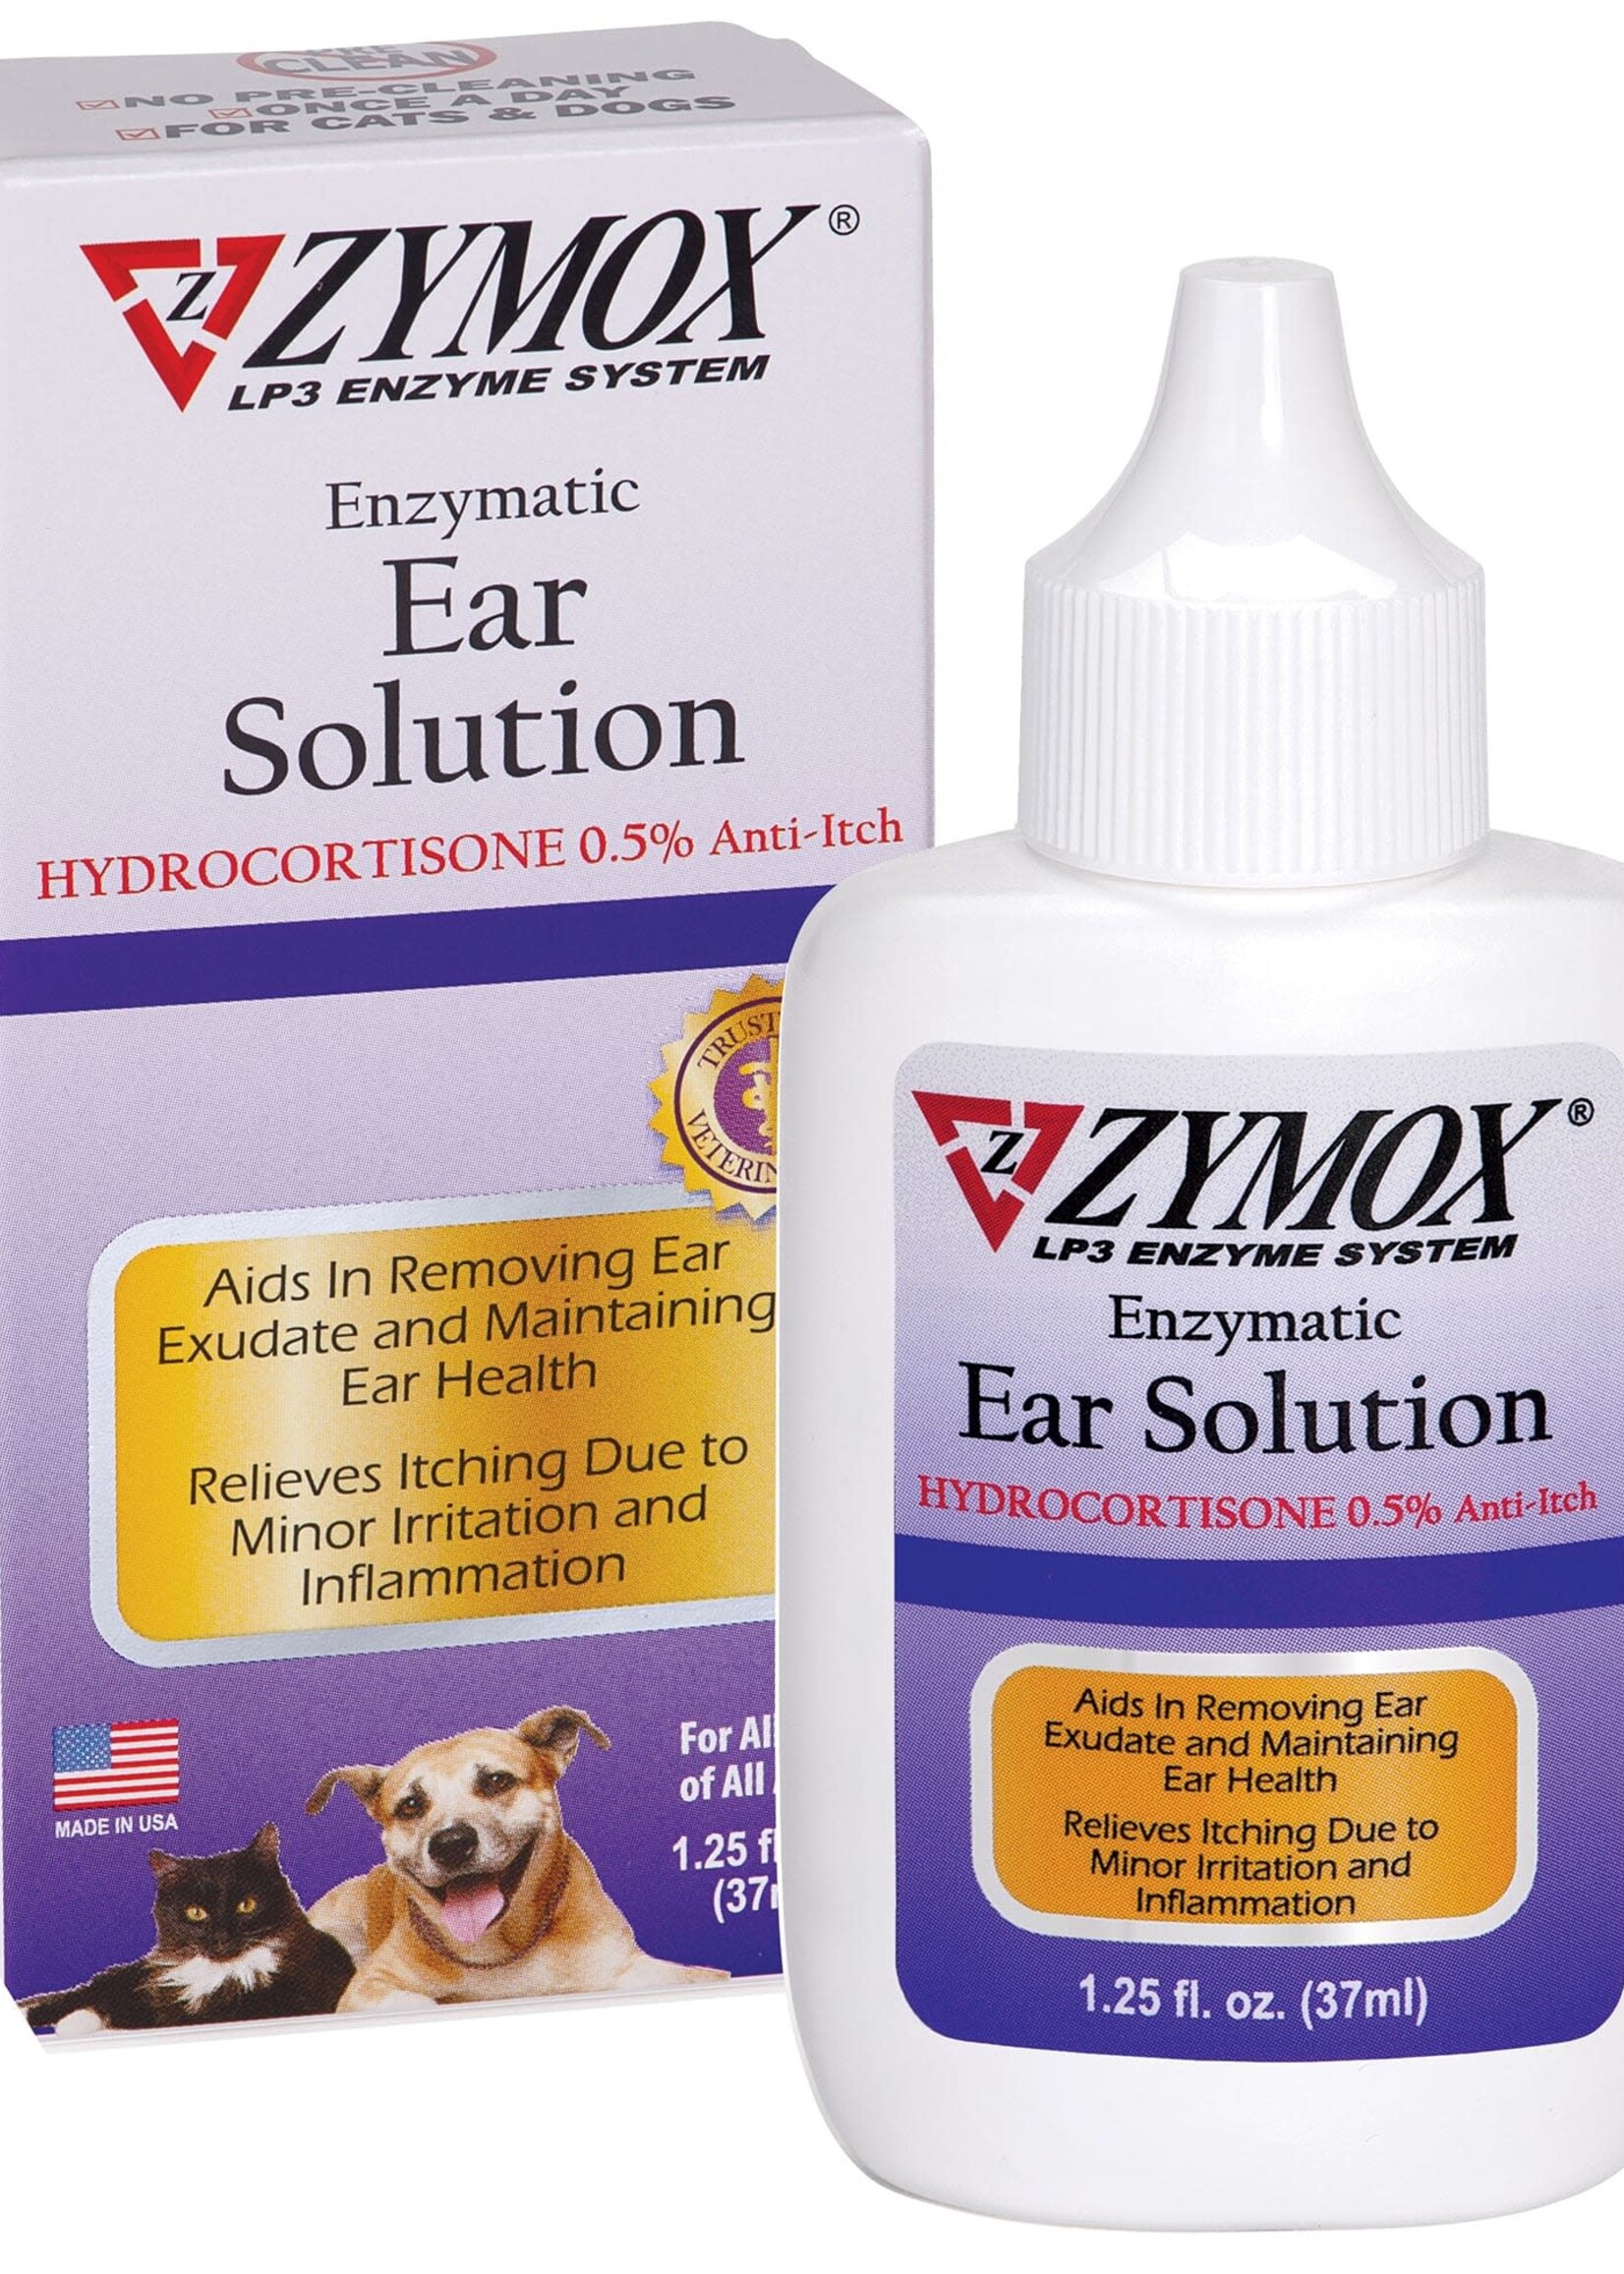 ZYMOX LP3 ENZYME SYSTEM Zymox Ear Solution 1.25 oz  Bottle  .5% Hydrocortisone